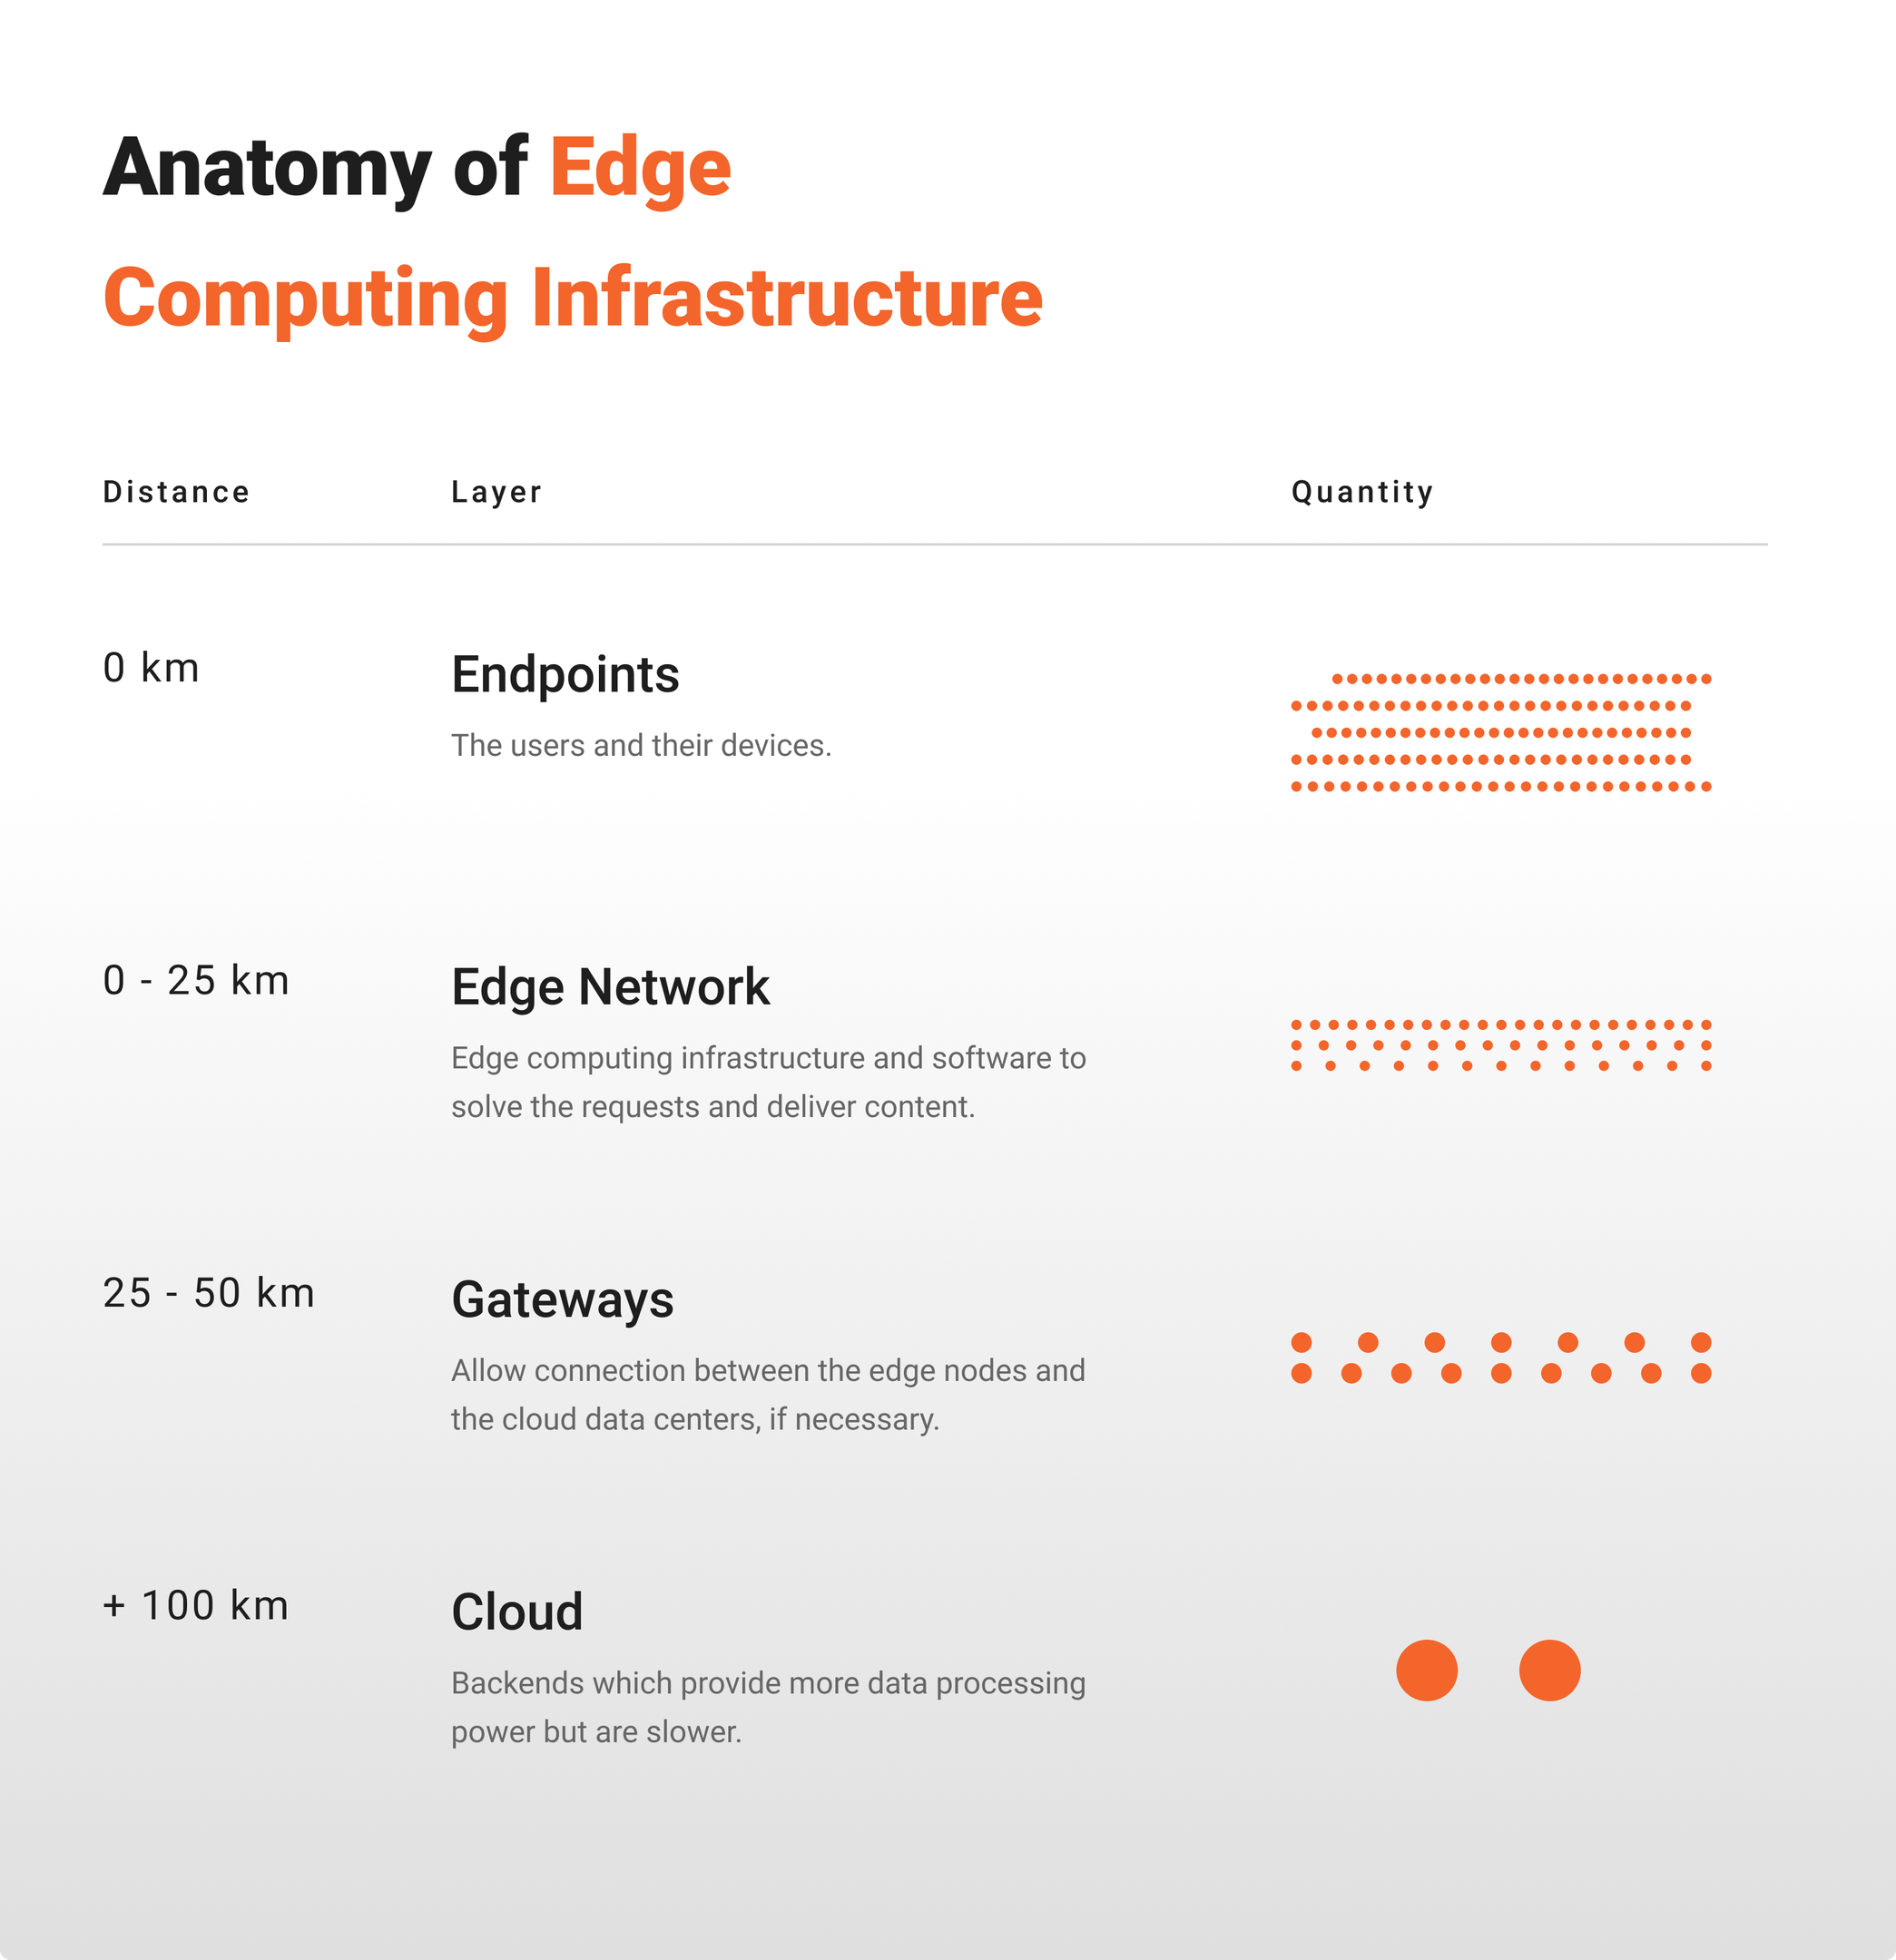 Anatomy of Edge Computing Infrastructure